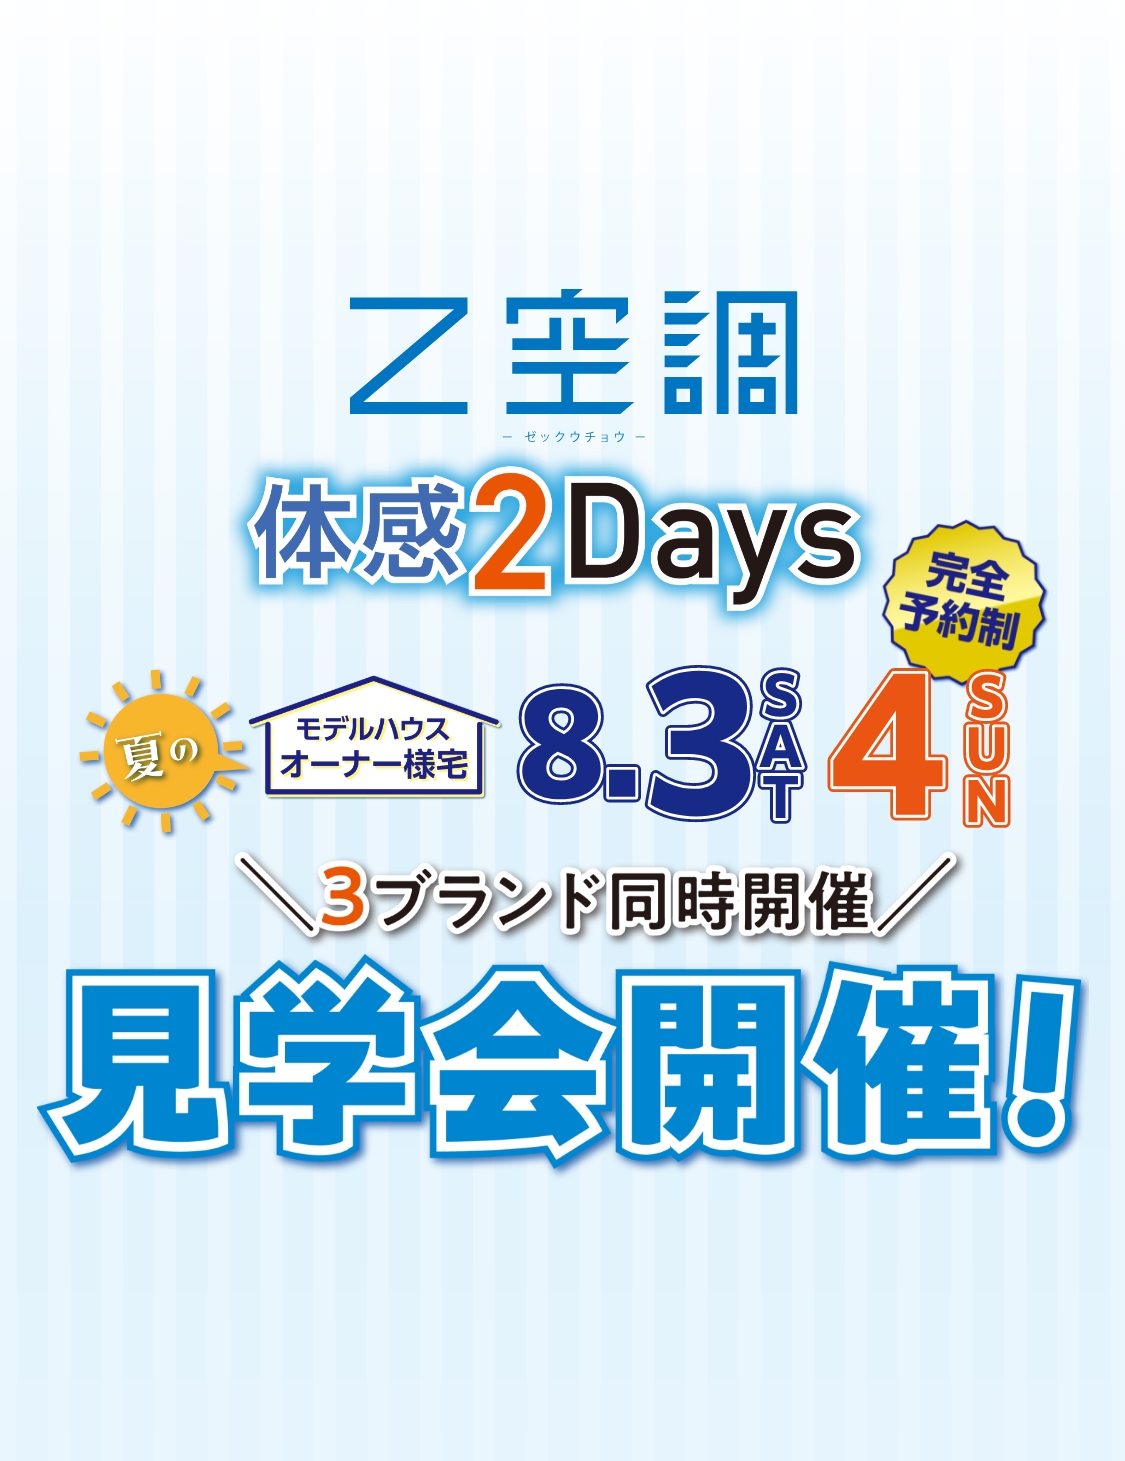 Z空調体感2Days夏のモデルハウスオーナー様宅8.3[SAT]4[SUN]＼3ブランド同時開催／見学会開催！